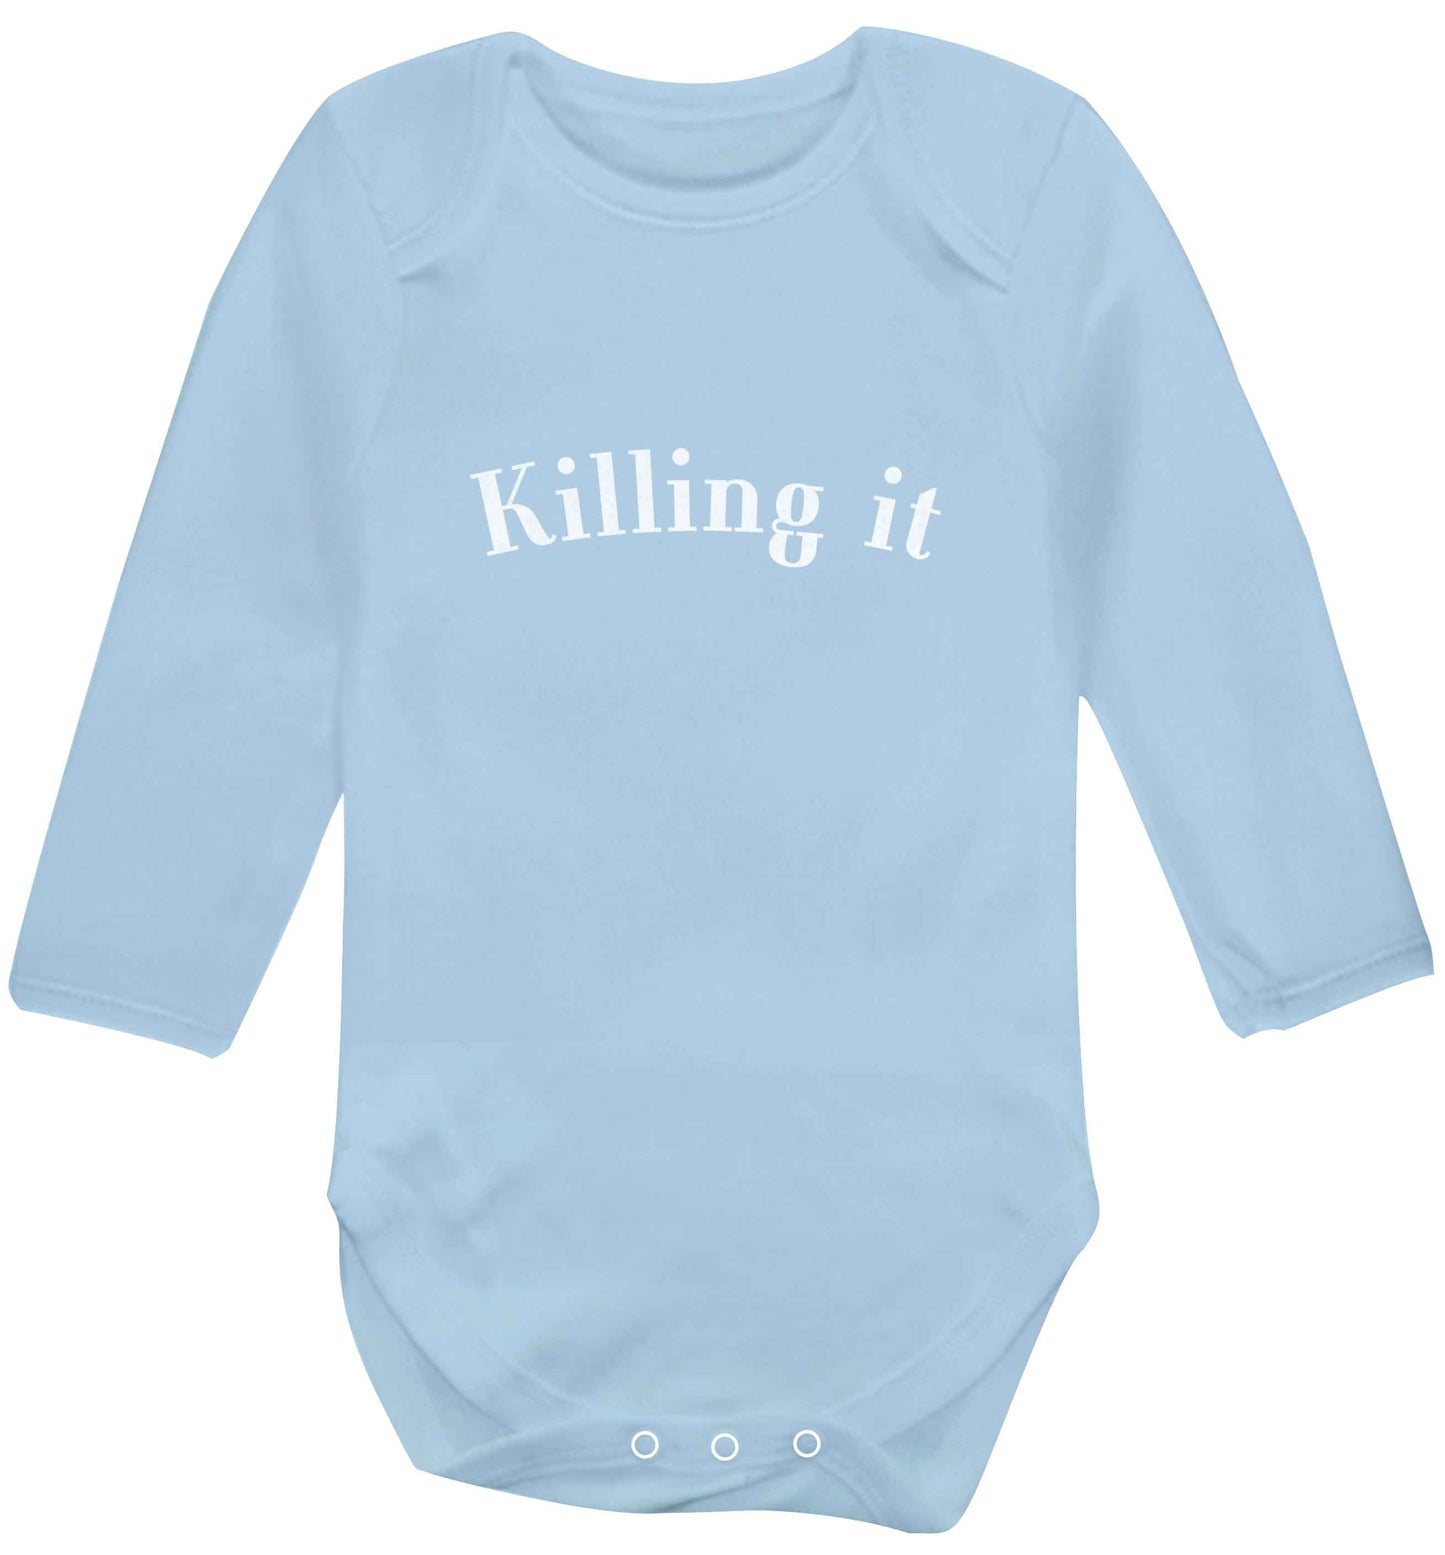 Killing it baby vest long sleeved pale blue 6-12 months